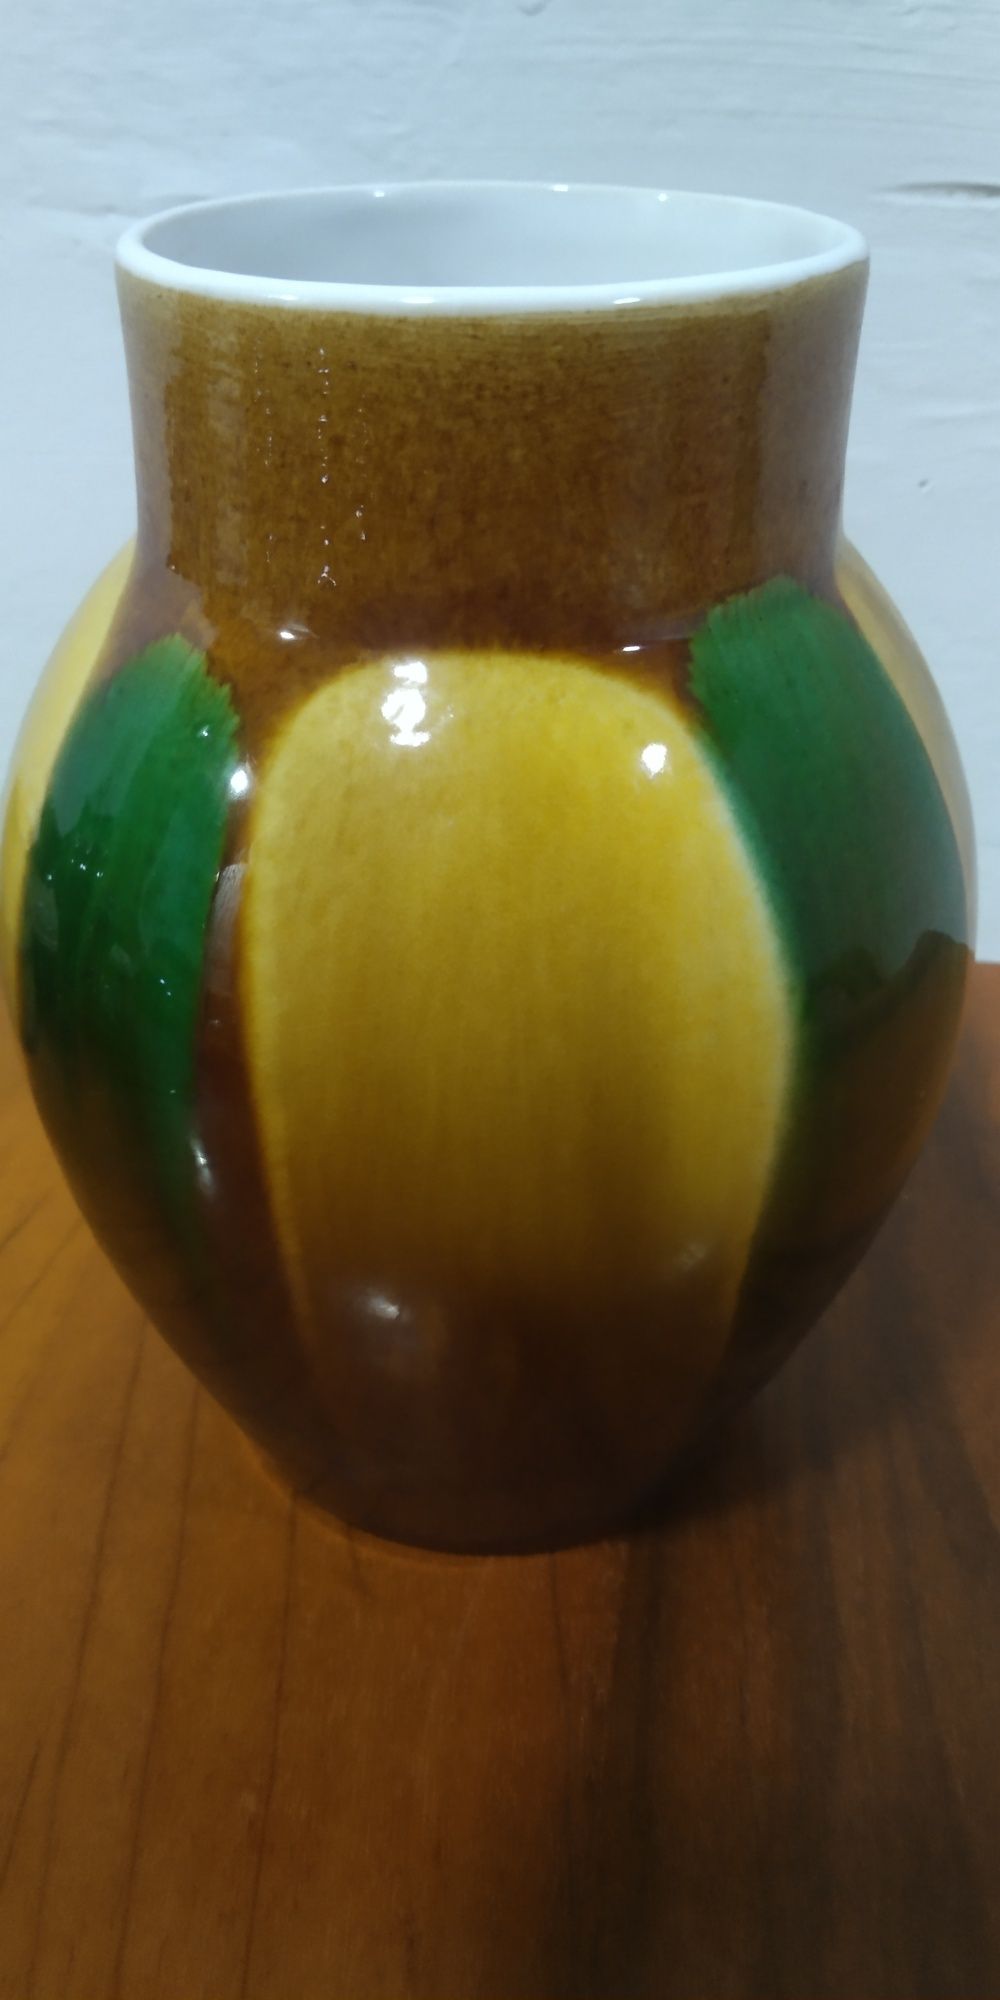 Майолика обливная керамика Проторьевых вазочки крылатая ваза 20-х год.